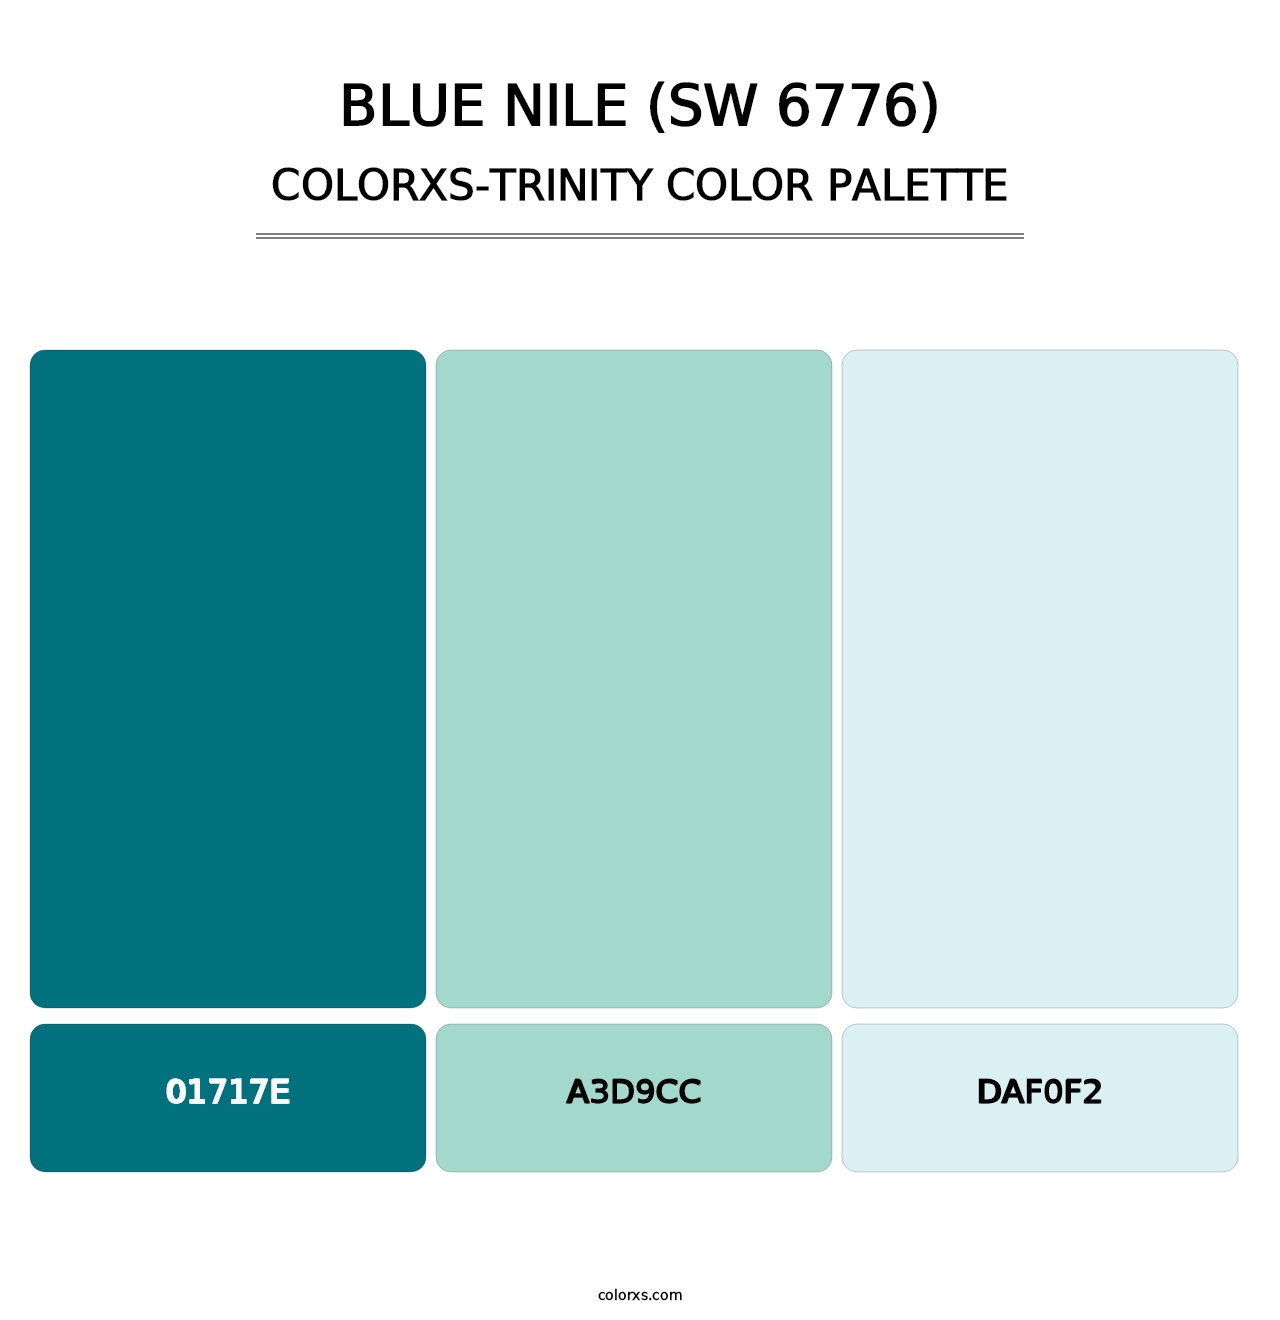 Blue Nile (SW 6776) - Colorxs Trinity Palette